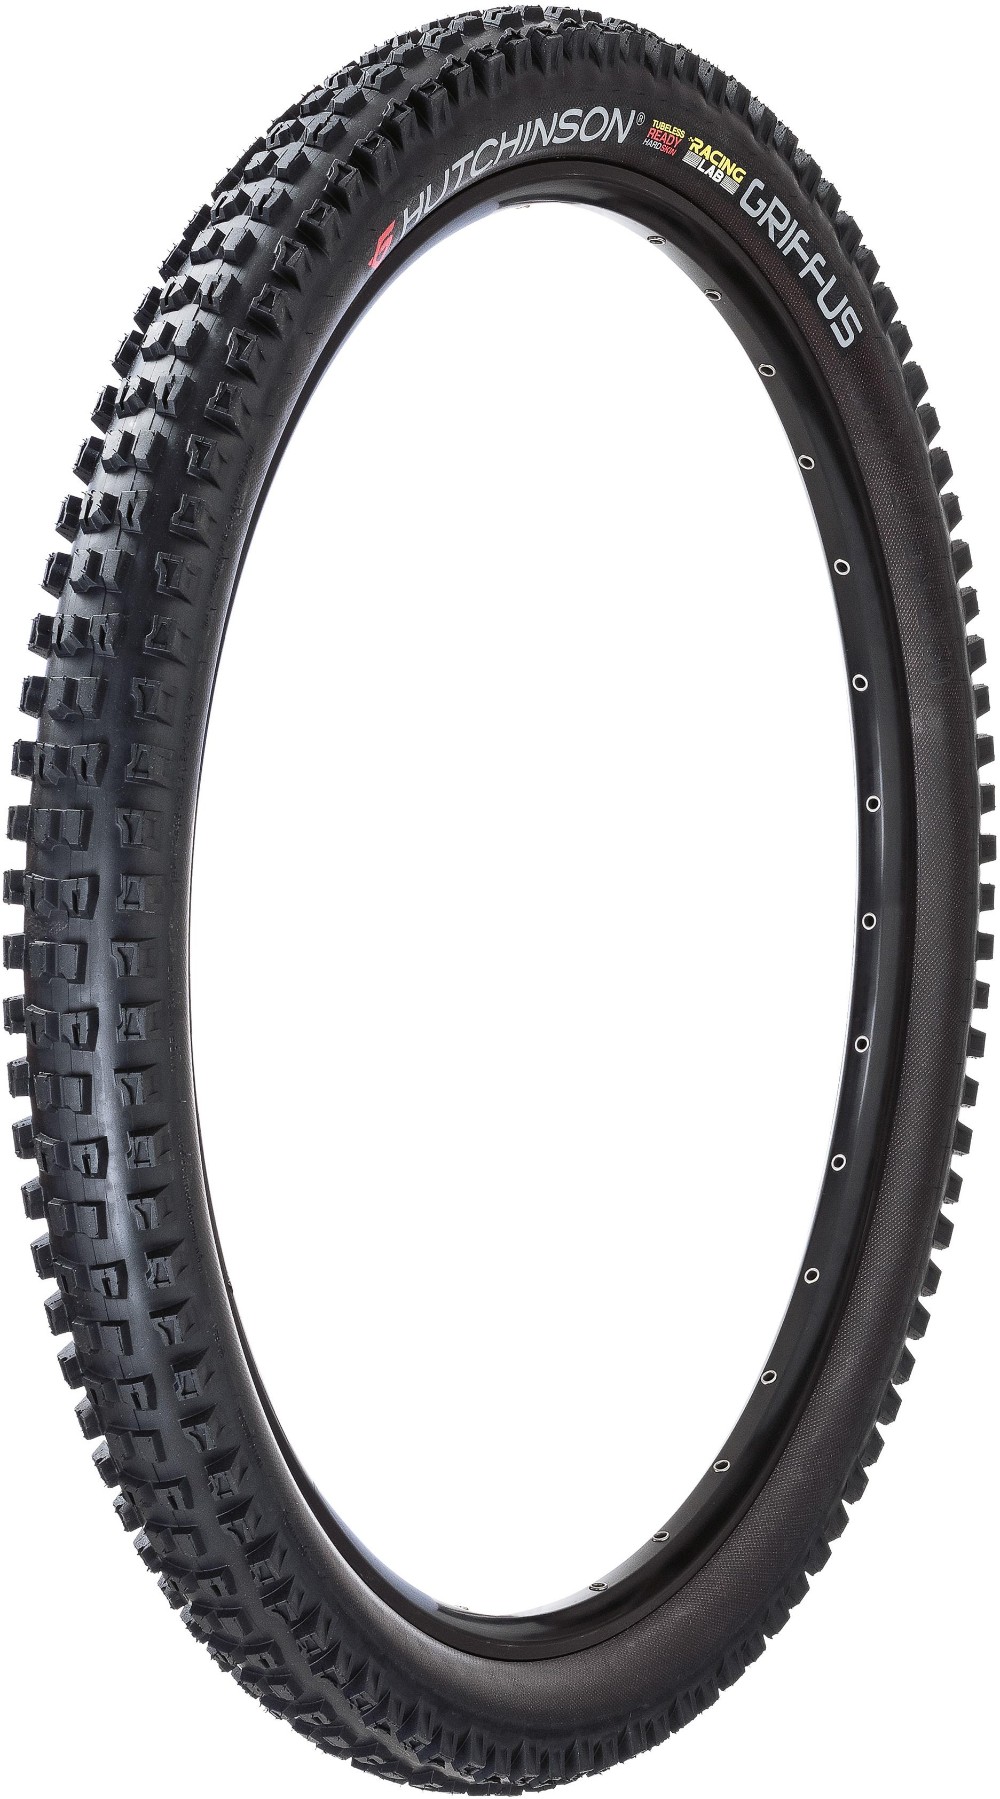 Griffus Racing Lab 27.5" MTB Tyre image 0